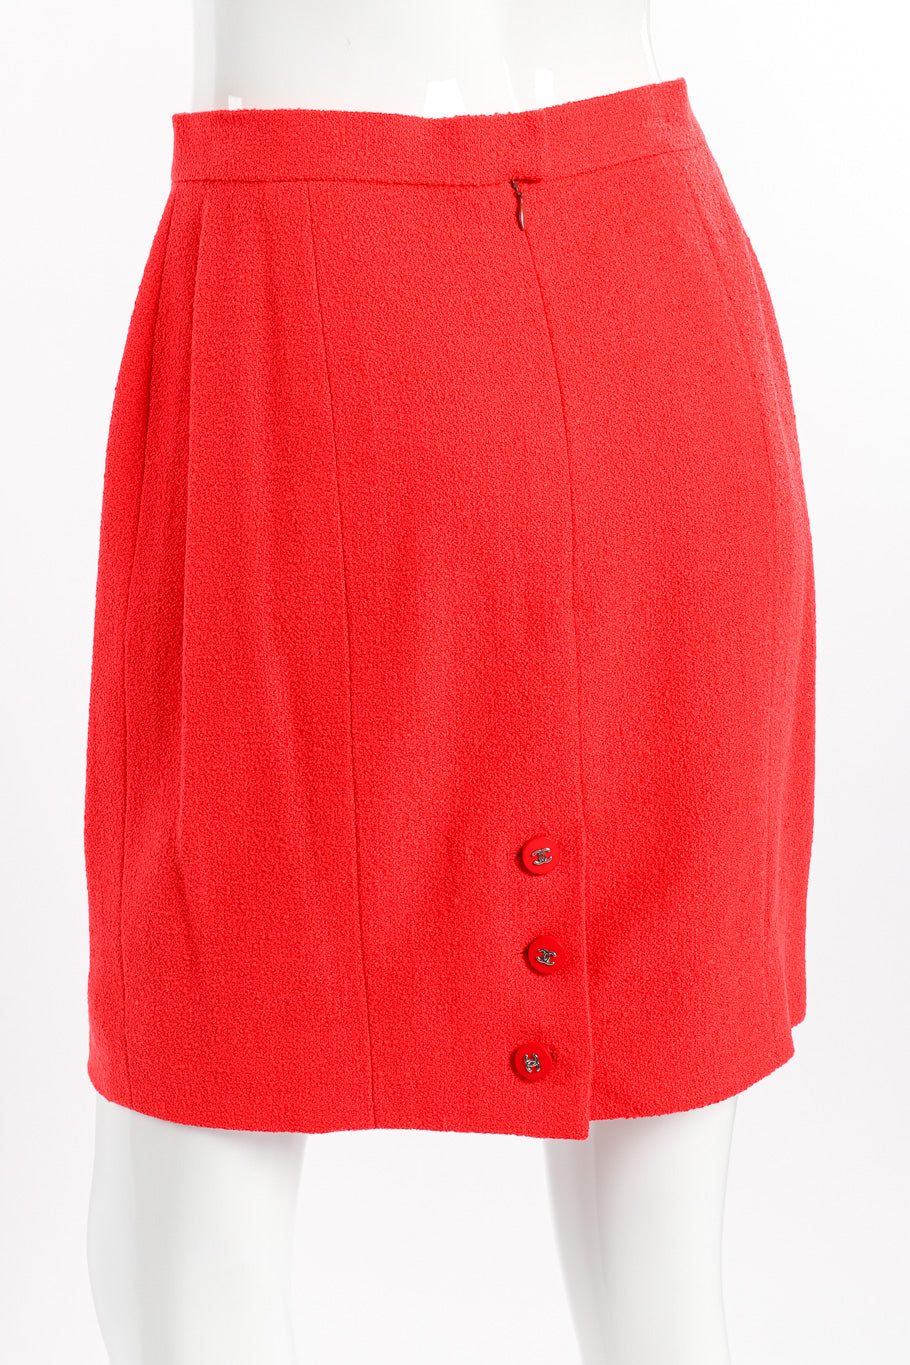 1996 F/W Bouclé Knit Longline Blazer & Skirt Set by Chanel on mannequin skirt only back  @recessla